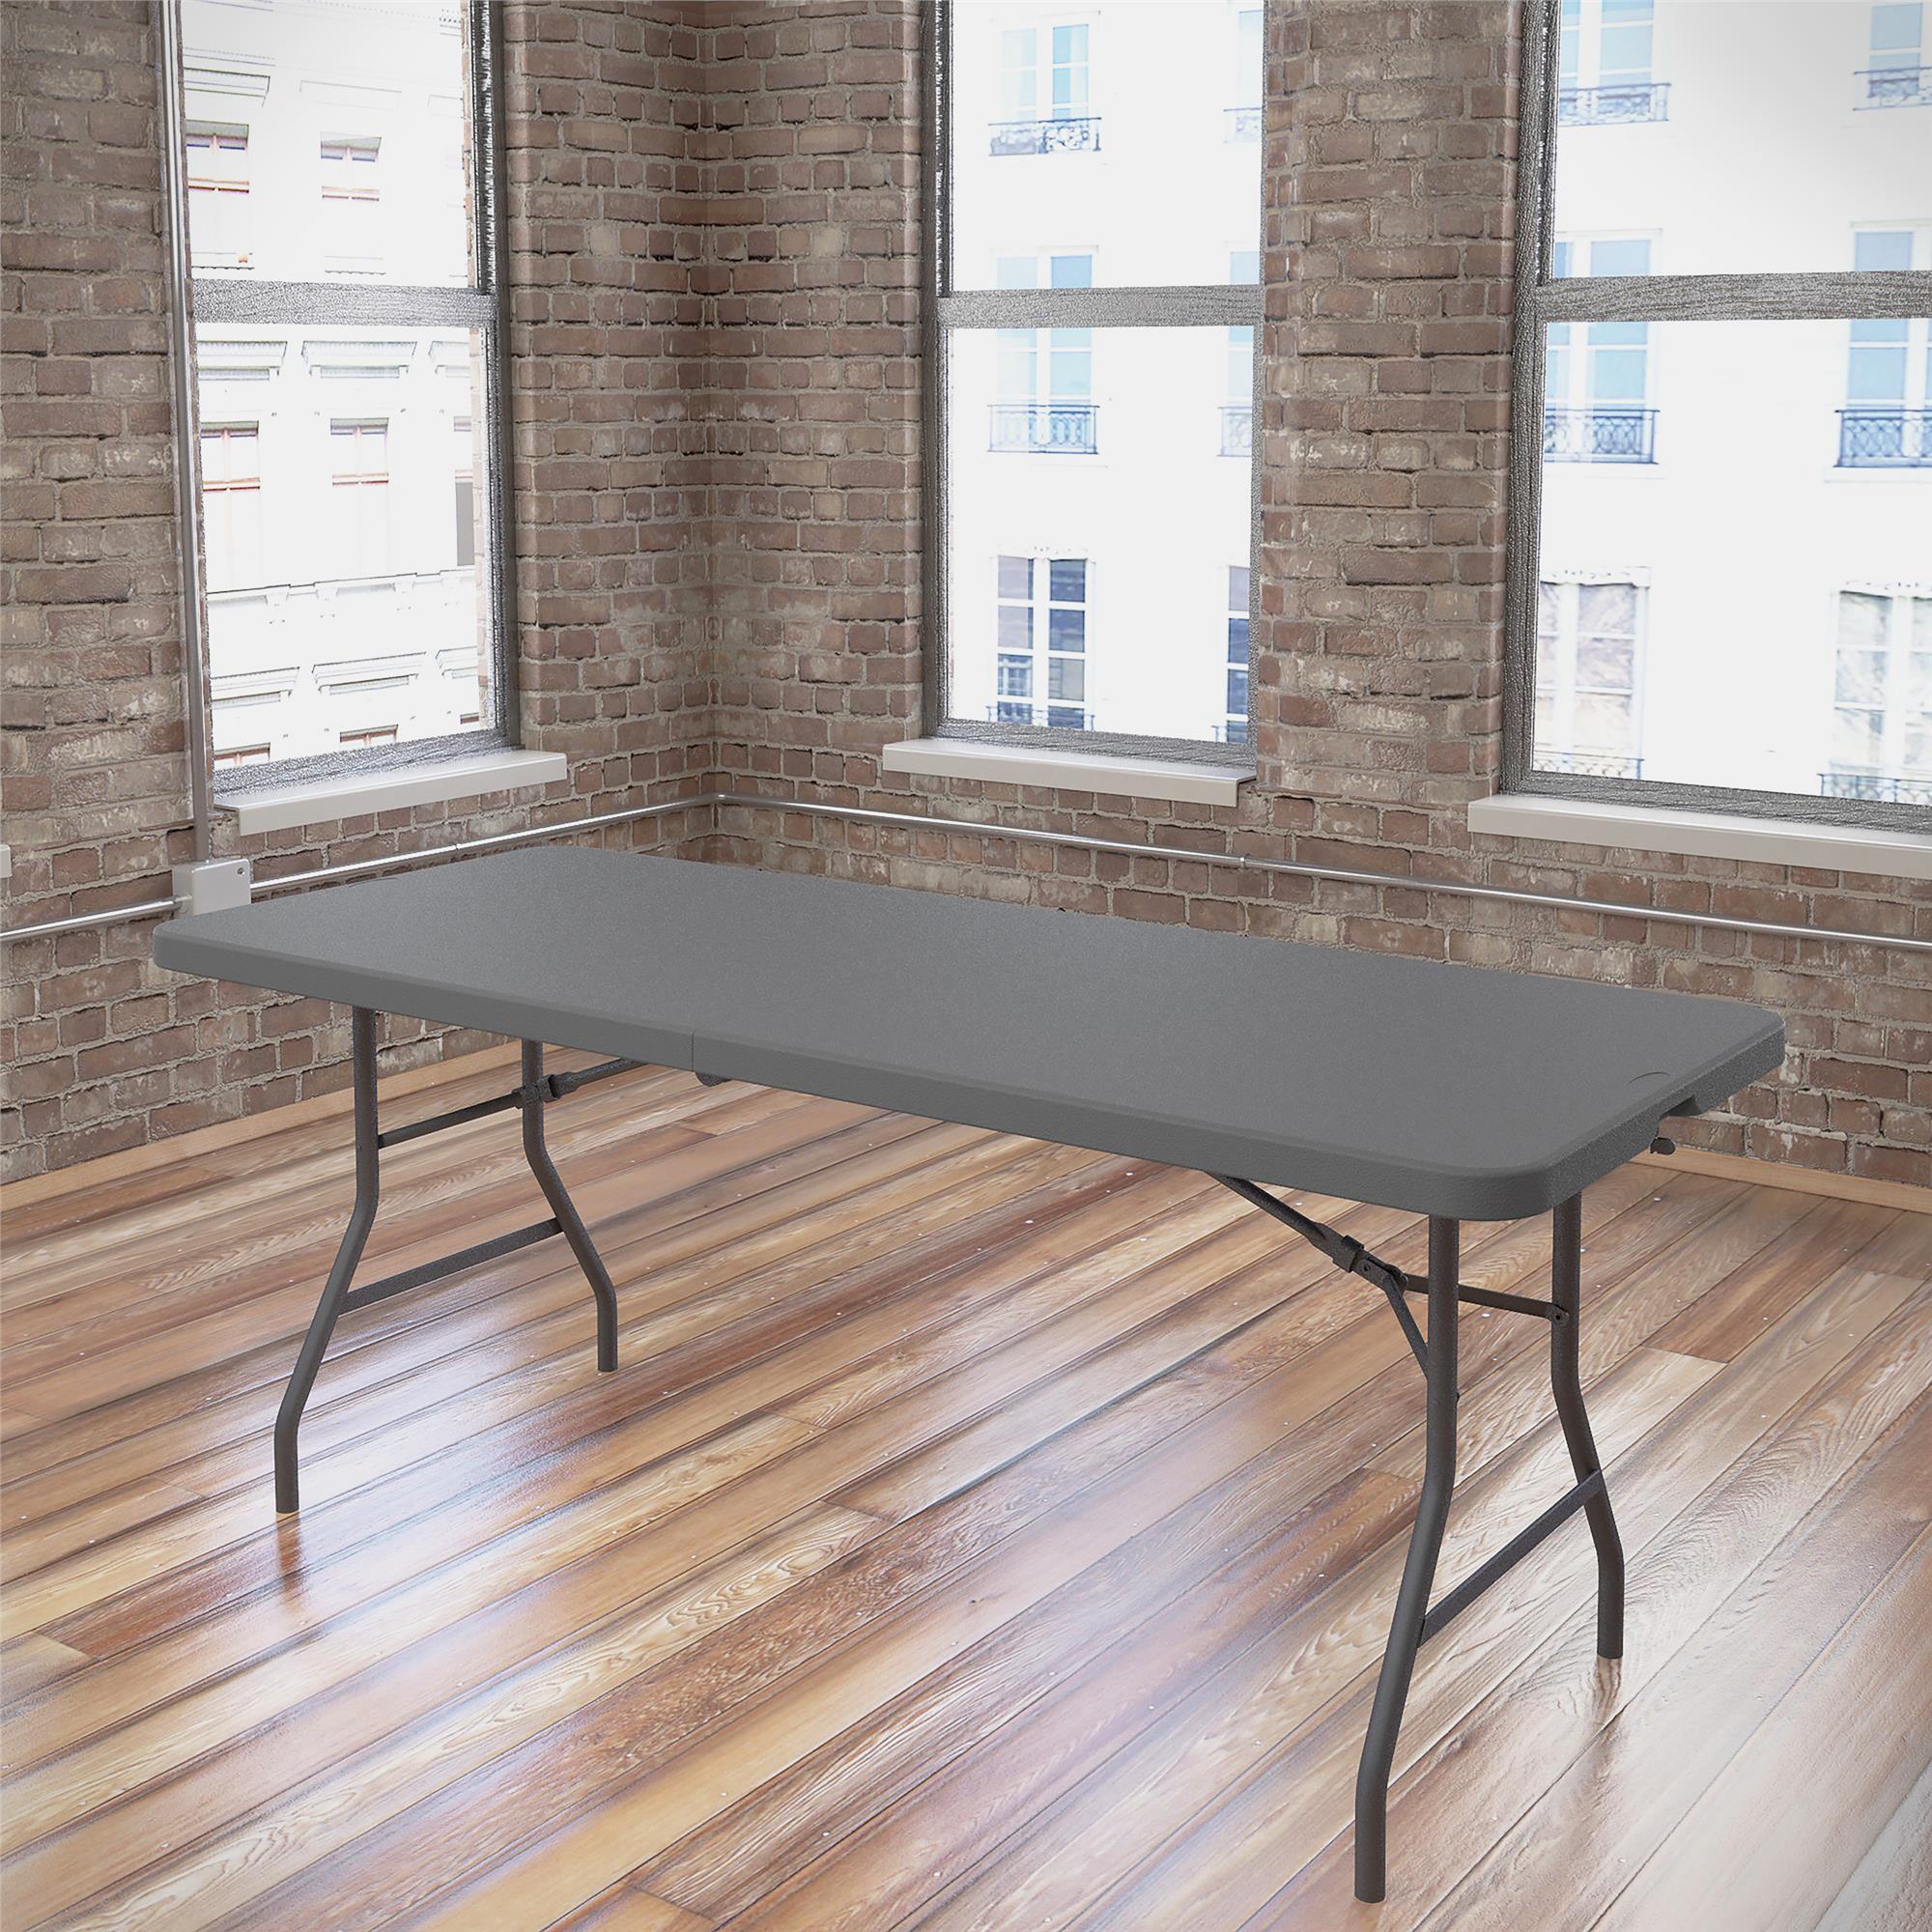 6 ft. Resin Multipurpose Table with Folding Legs